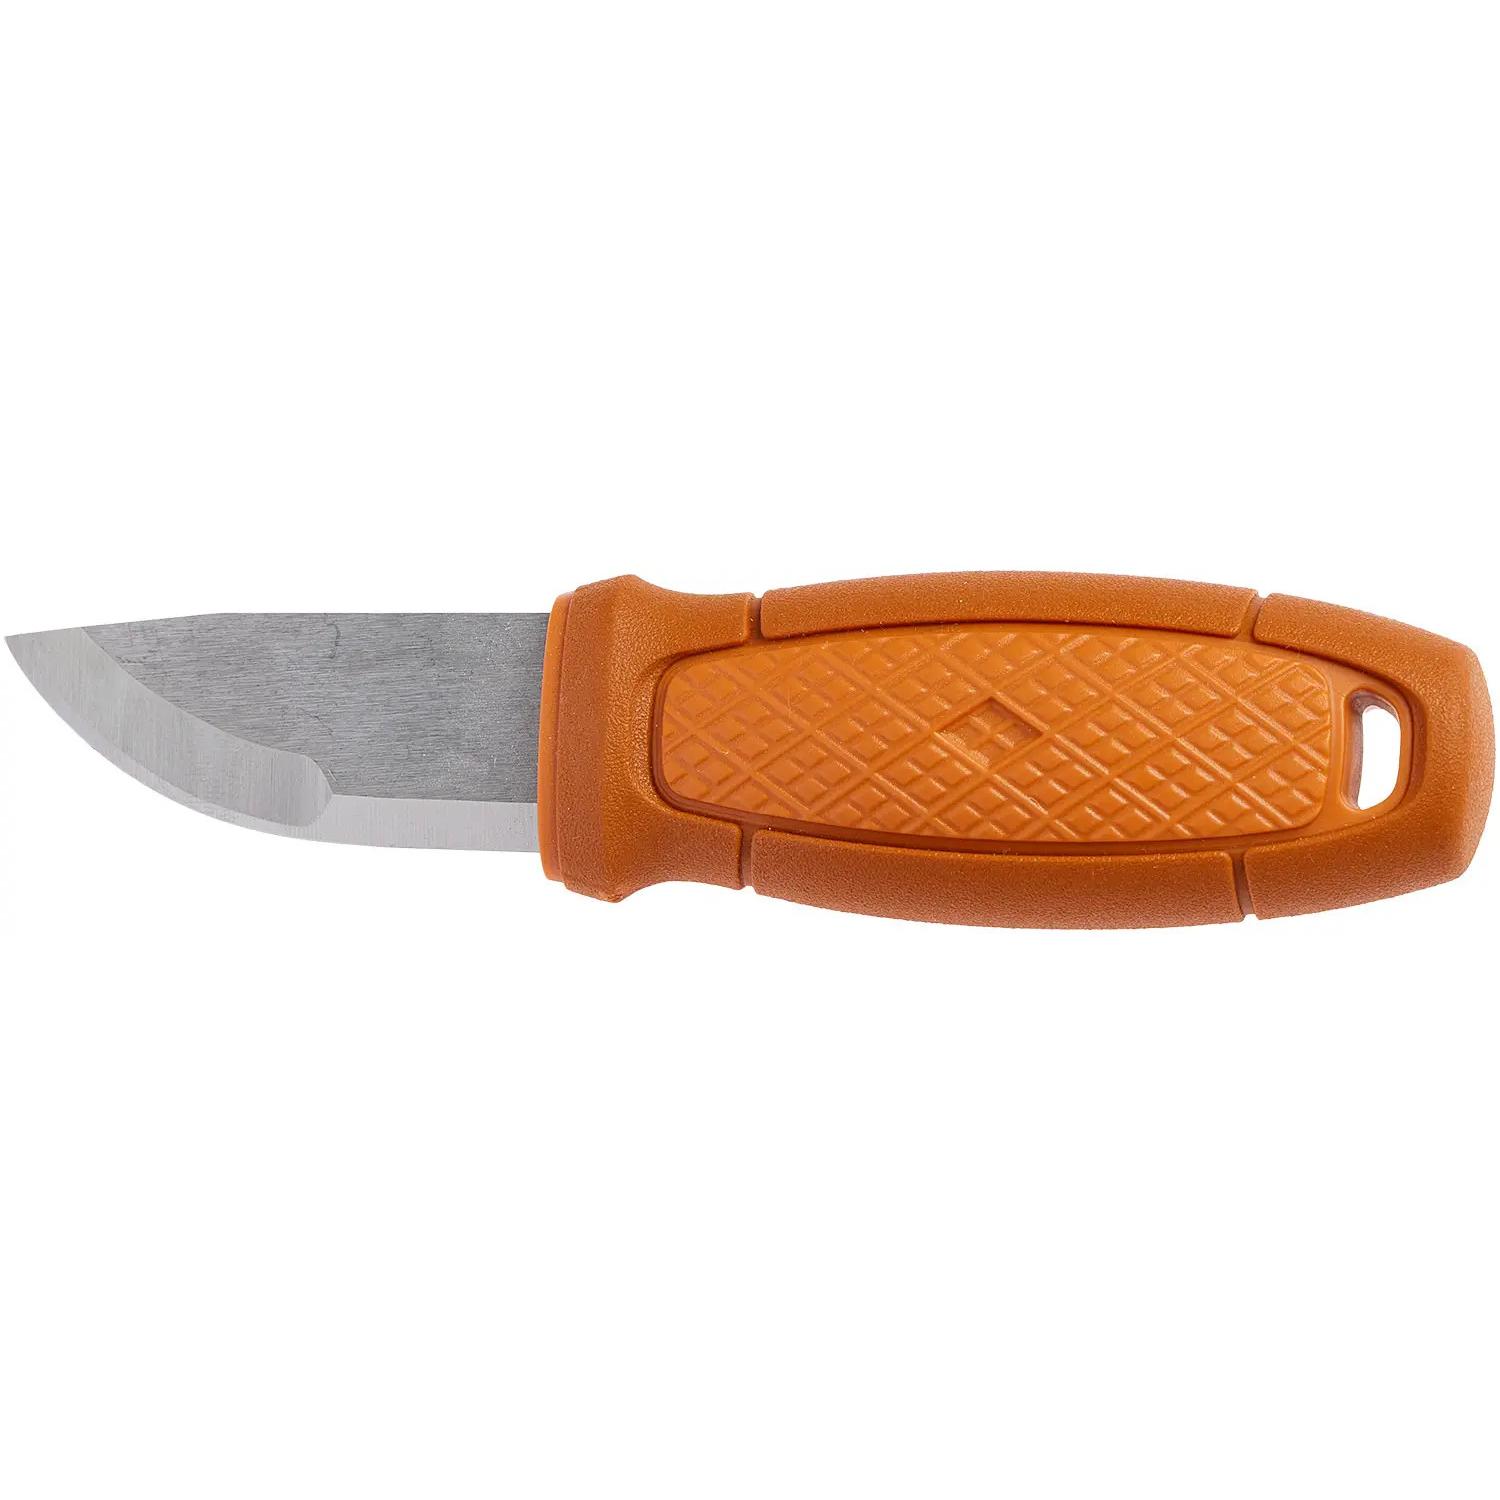 Нож Morakniv Eldris Neck Knife. Цвет - оранжевый 13502 2305.02.01